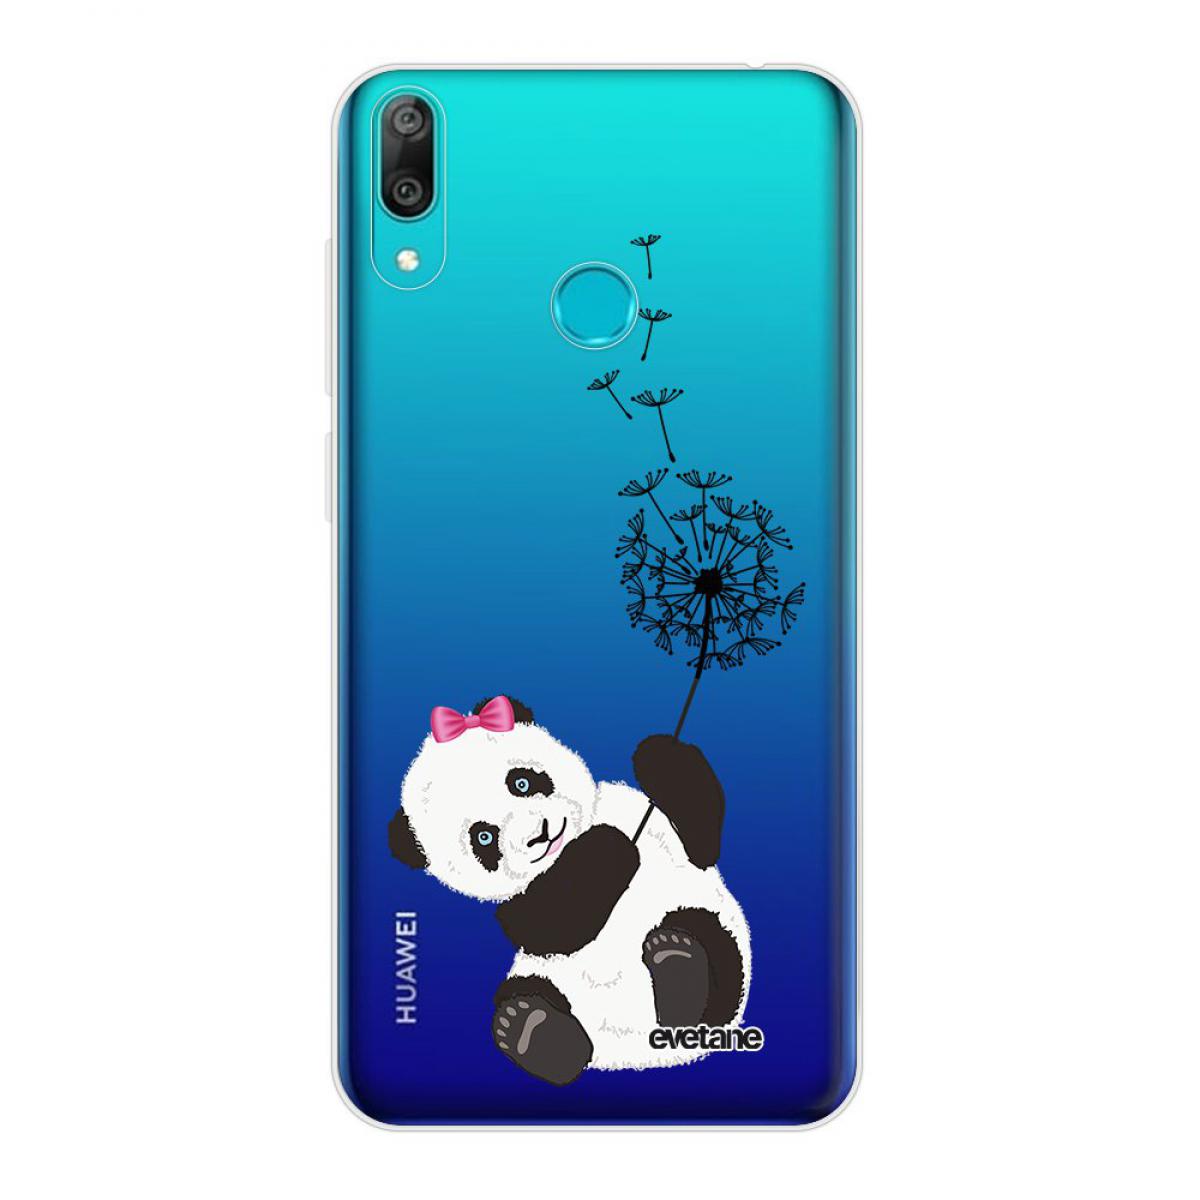 Evetane - Coque Huawei Y7 2019 360 intégrale transparente Panda Pissenlit Tendance Evetane. - Coque, étui smartphone